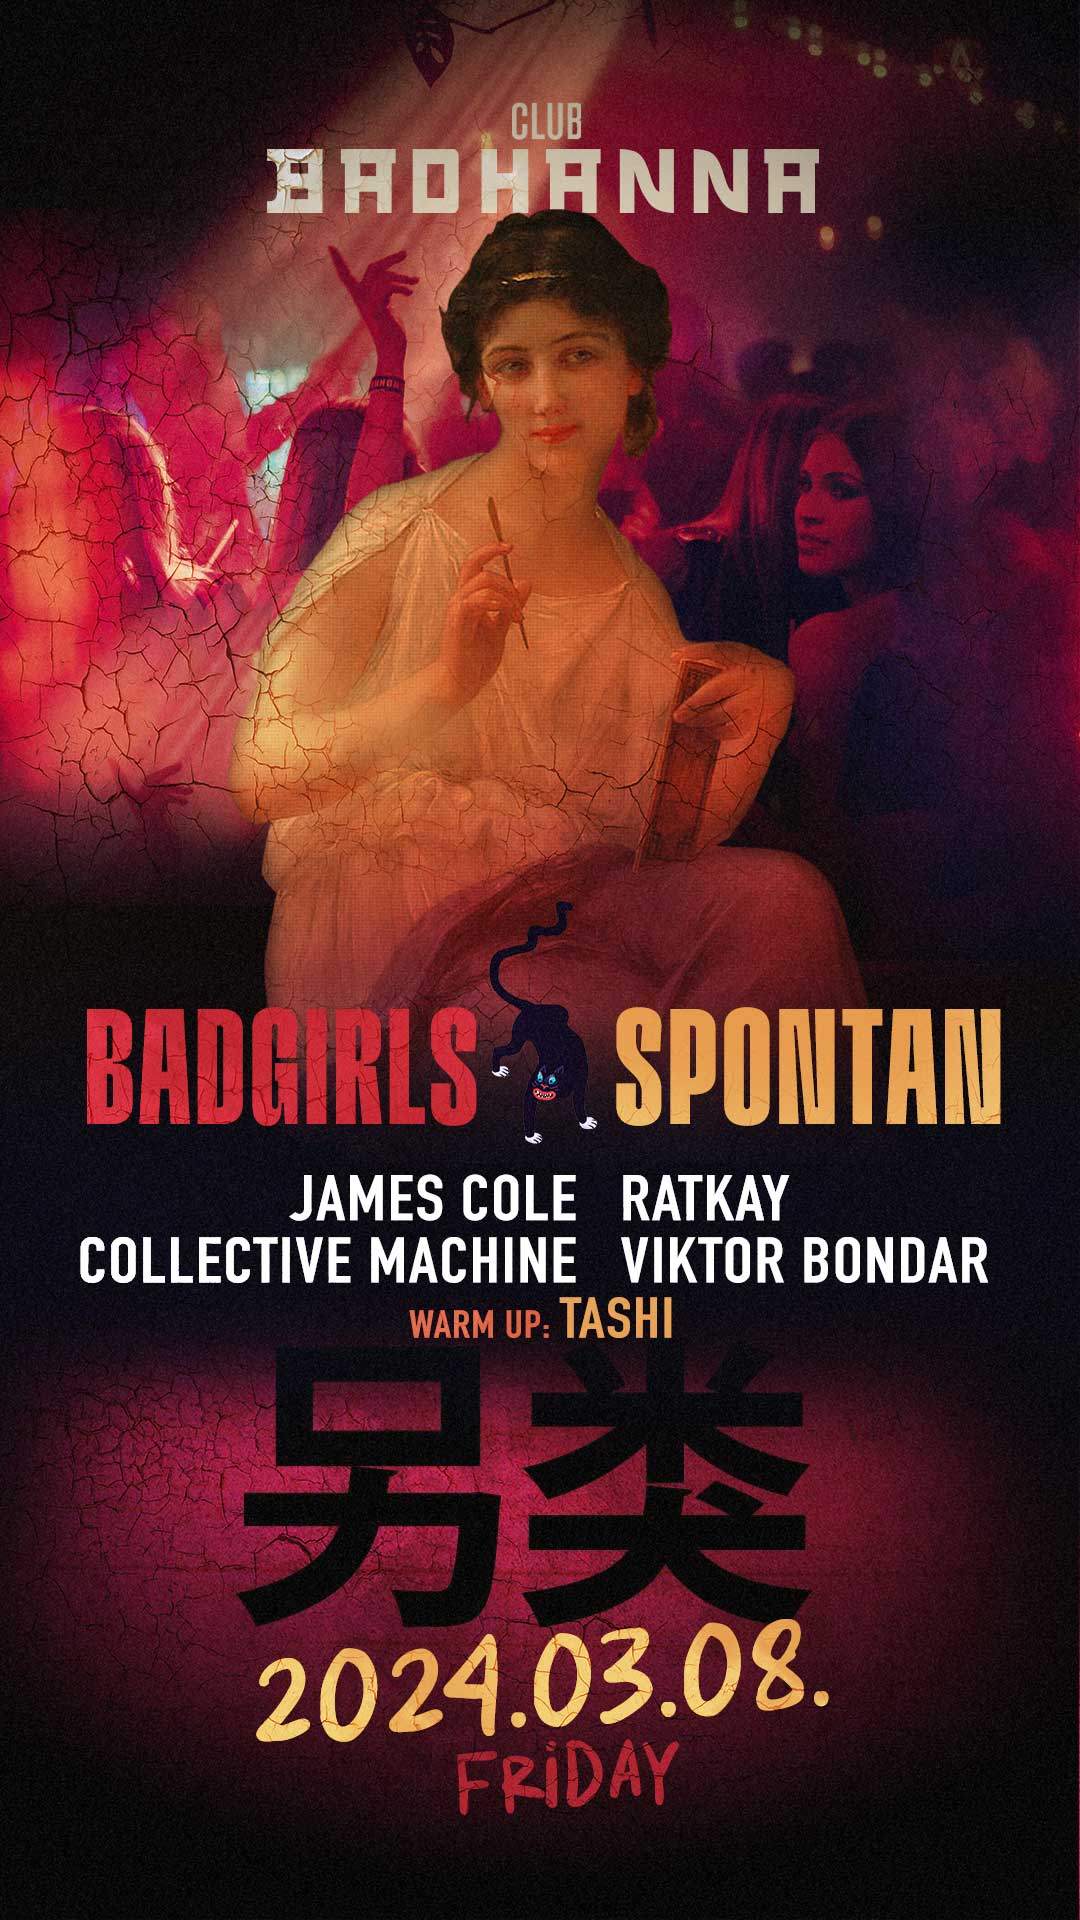 Badgirls vs SPONTAN Club BADHANNA Women's day Edition - フライヤー裏